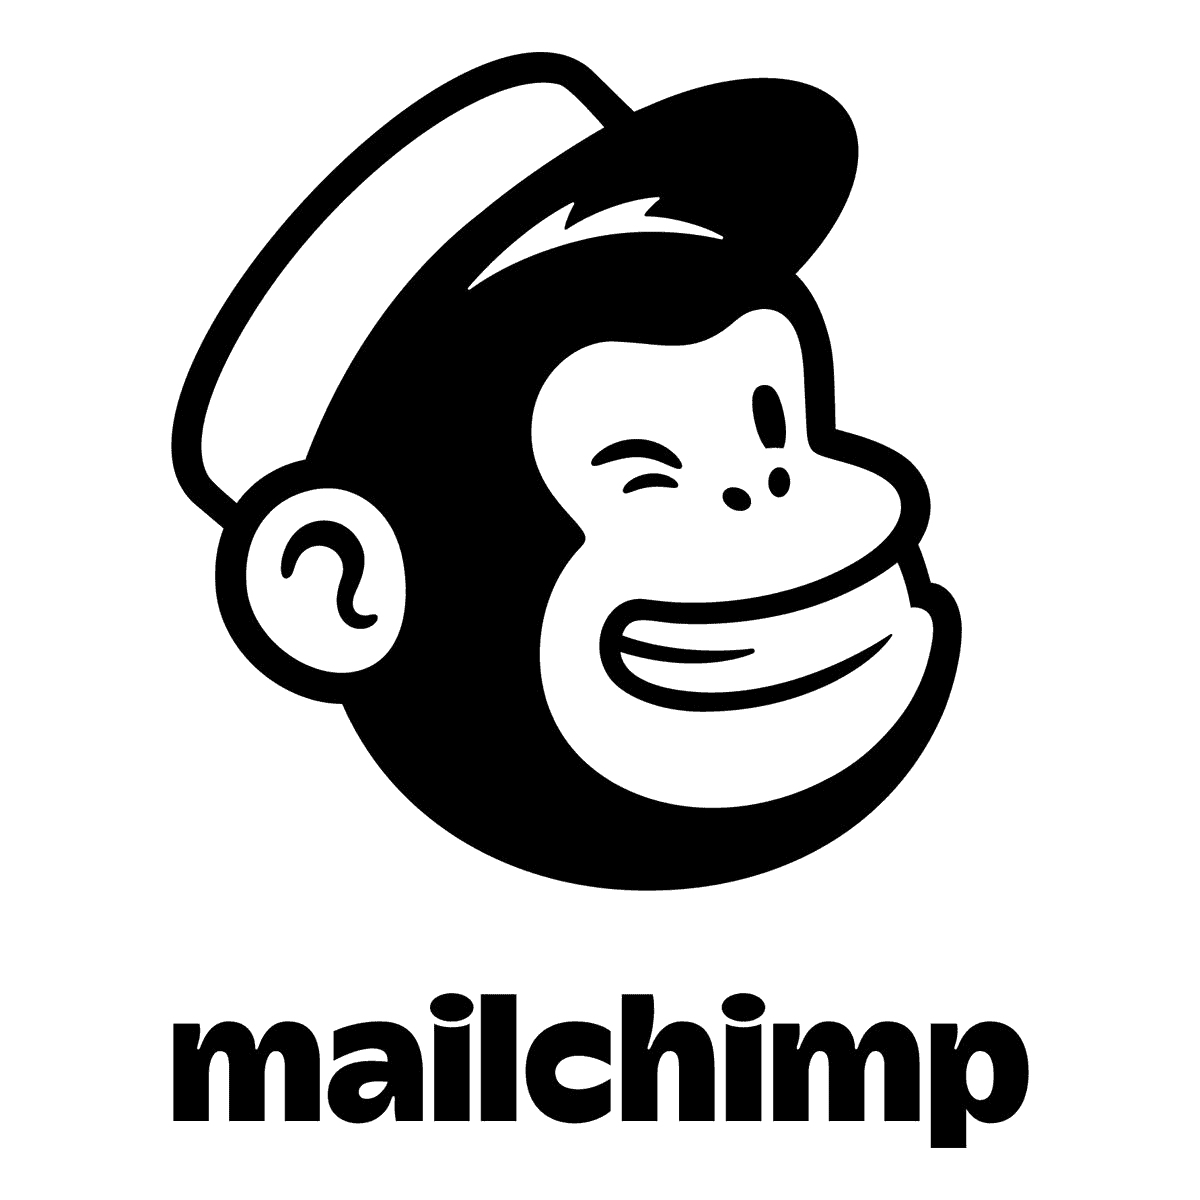 Mailchimp_logo.png